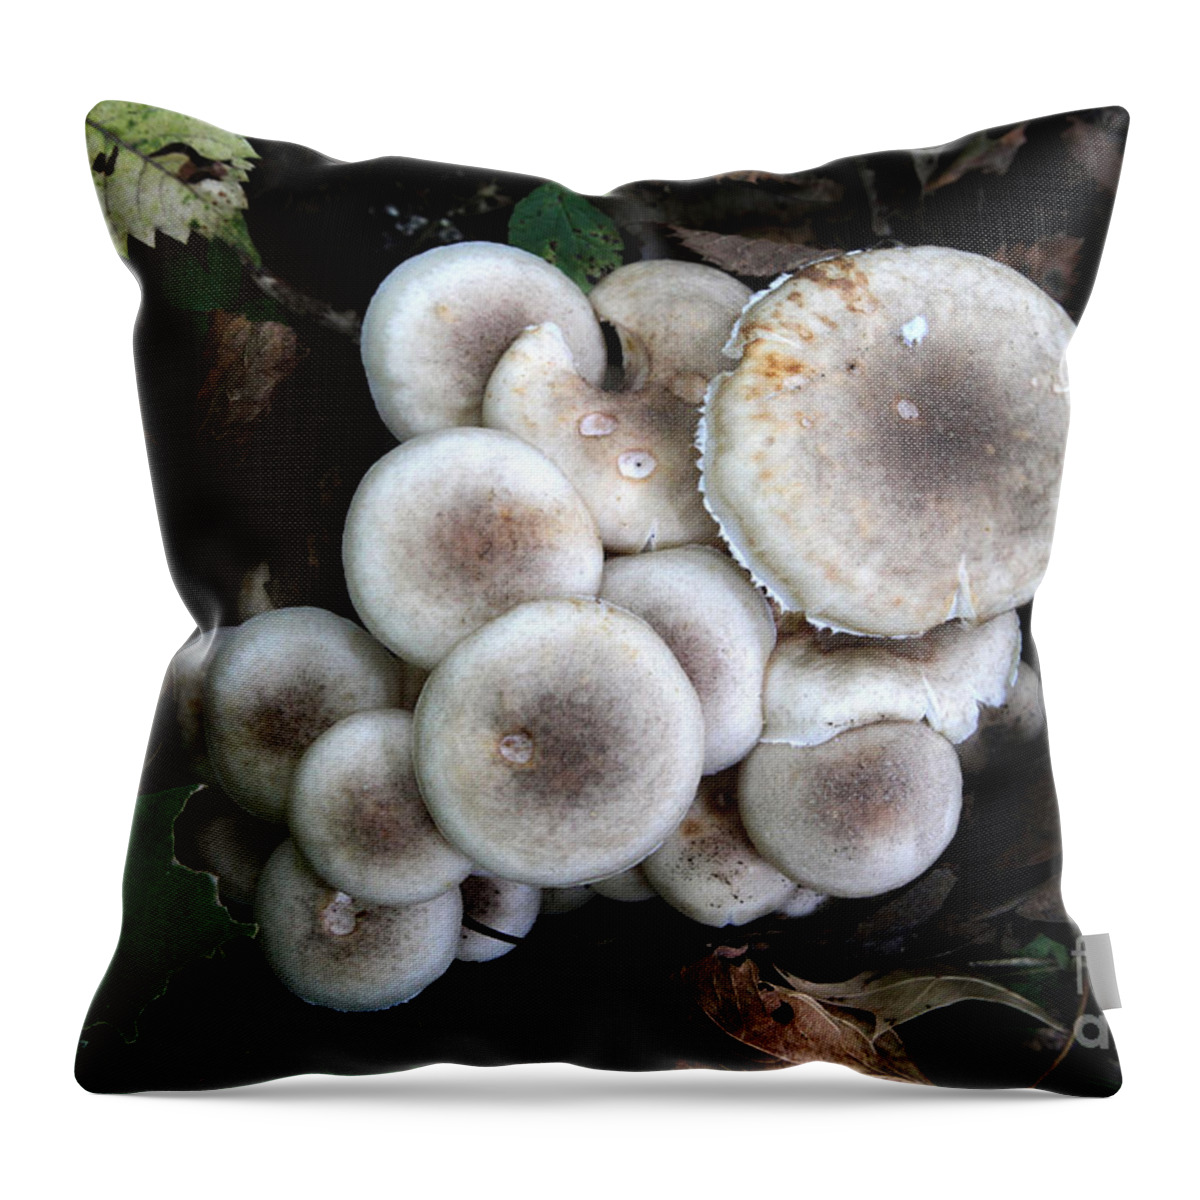 Mushrooms Throw Pillow featuring the photograph Mushroom Cluster # 2 by Rick Rauzi